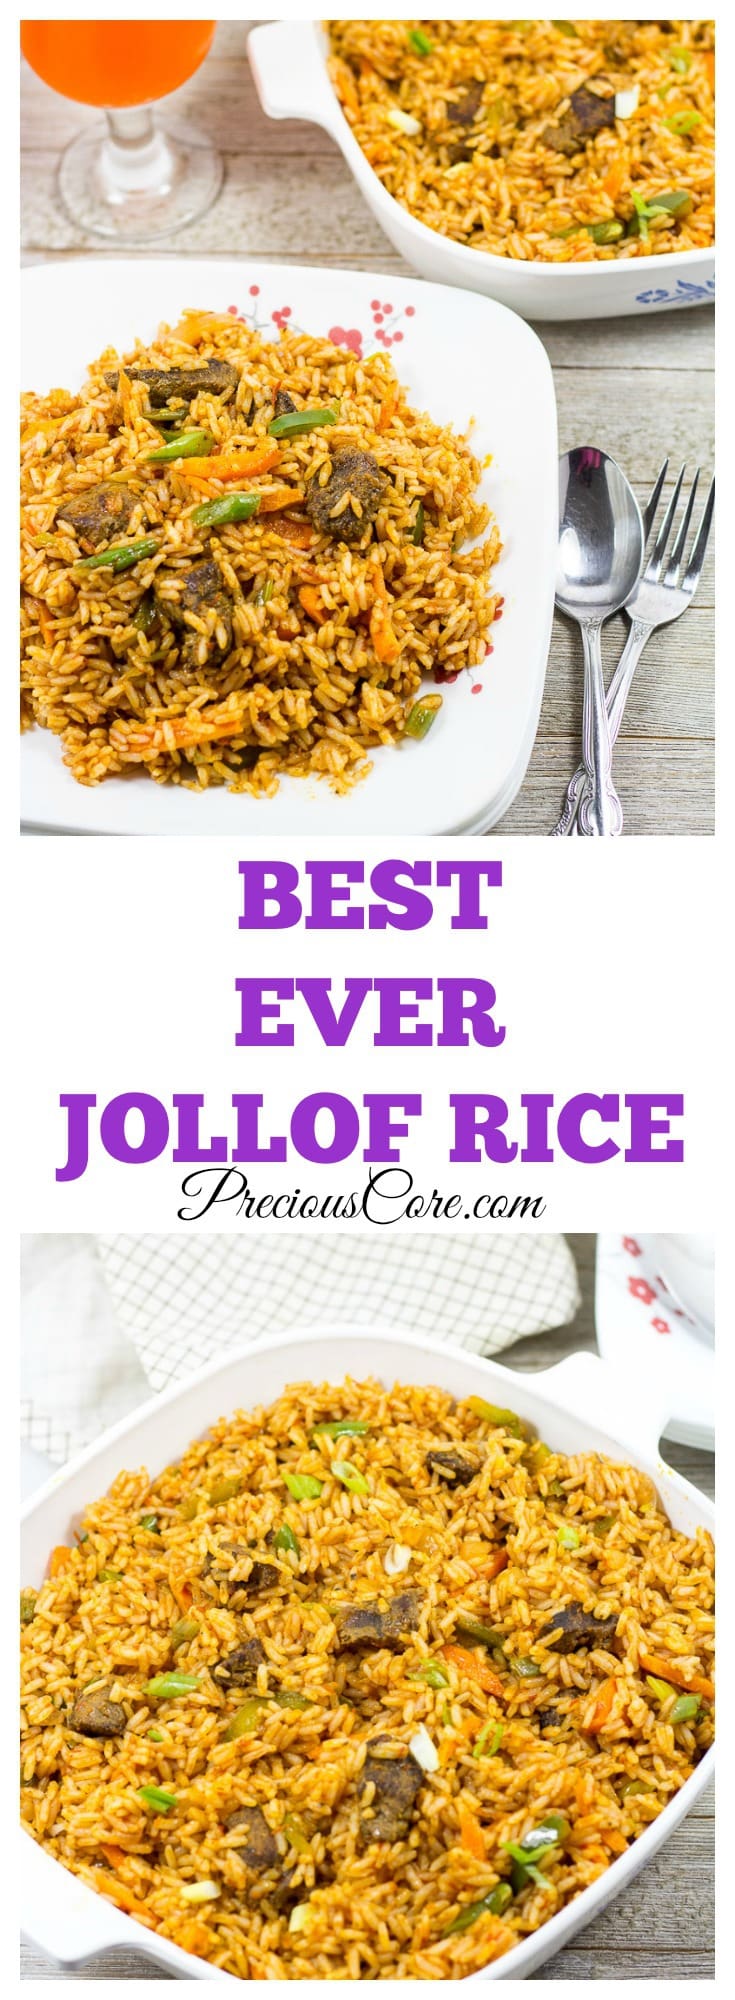 Best jollof rice recipe on the internet